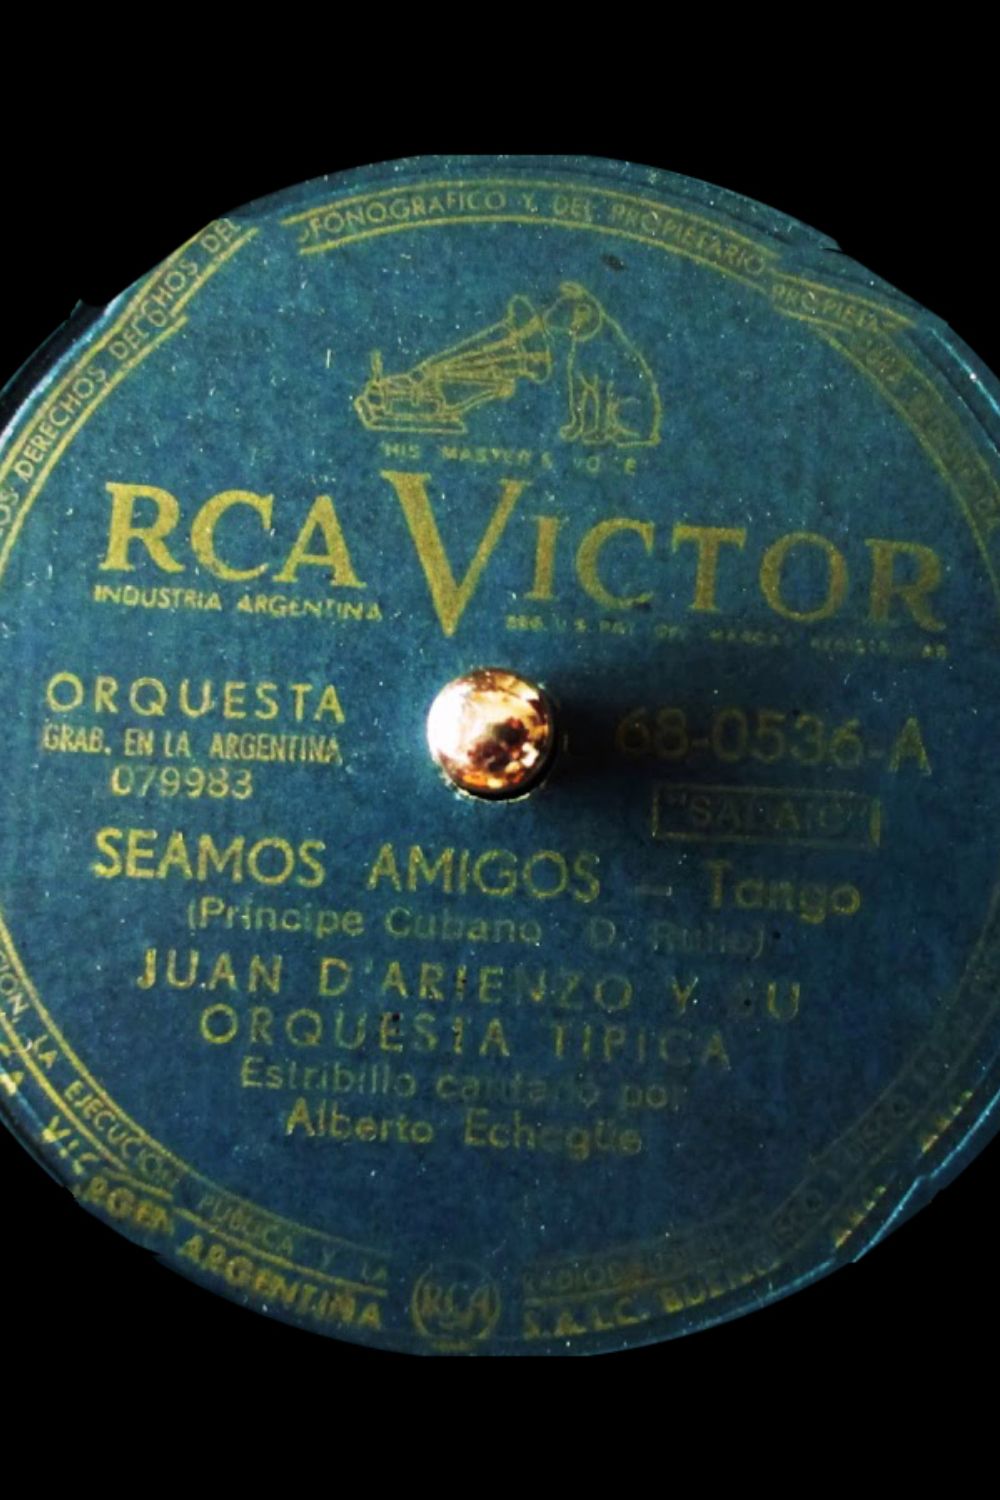 "Seamos amigos" By D'Arienzo - Echagüe. Argentine Tango music vinyl disc.